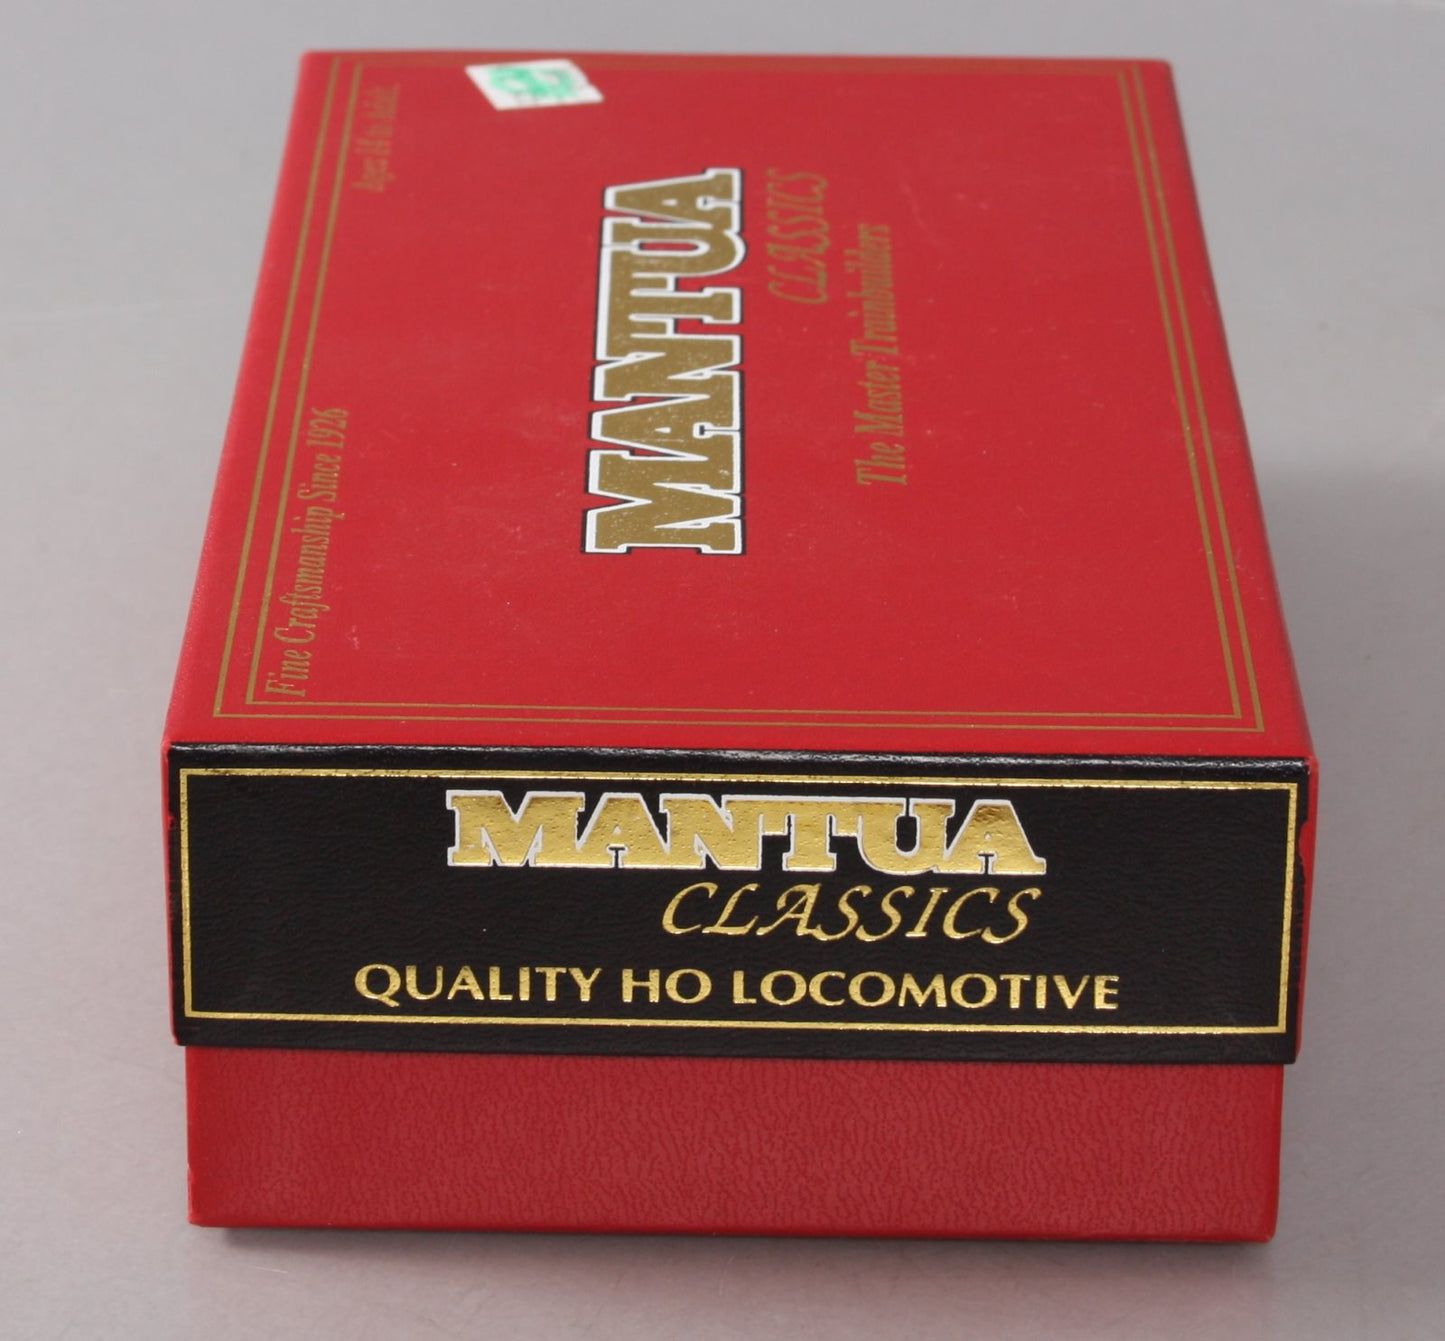 Mantua 393002 0-6-0 Tank Switcher B&O